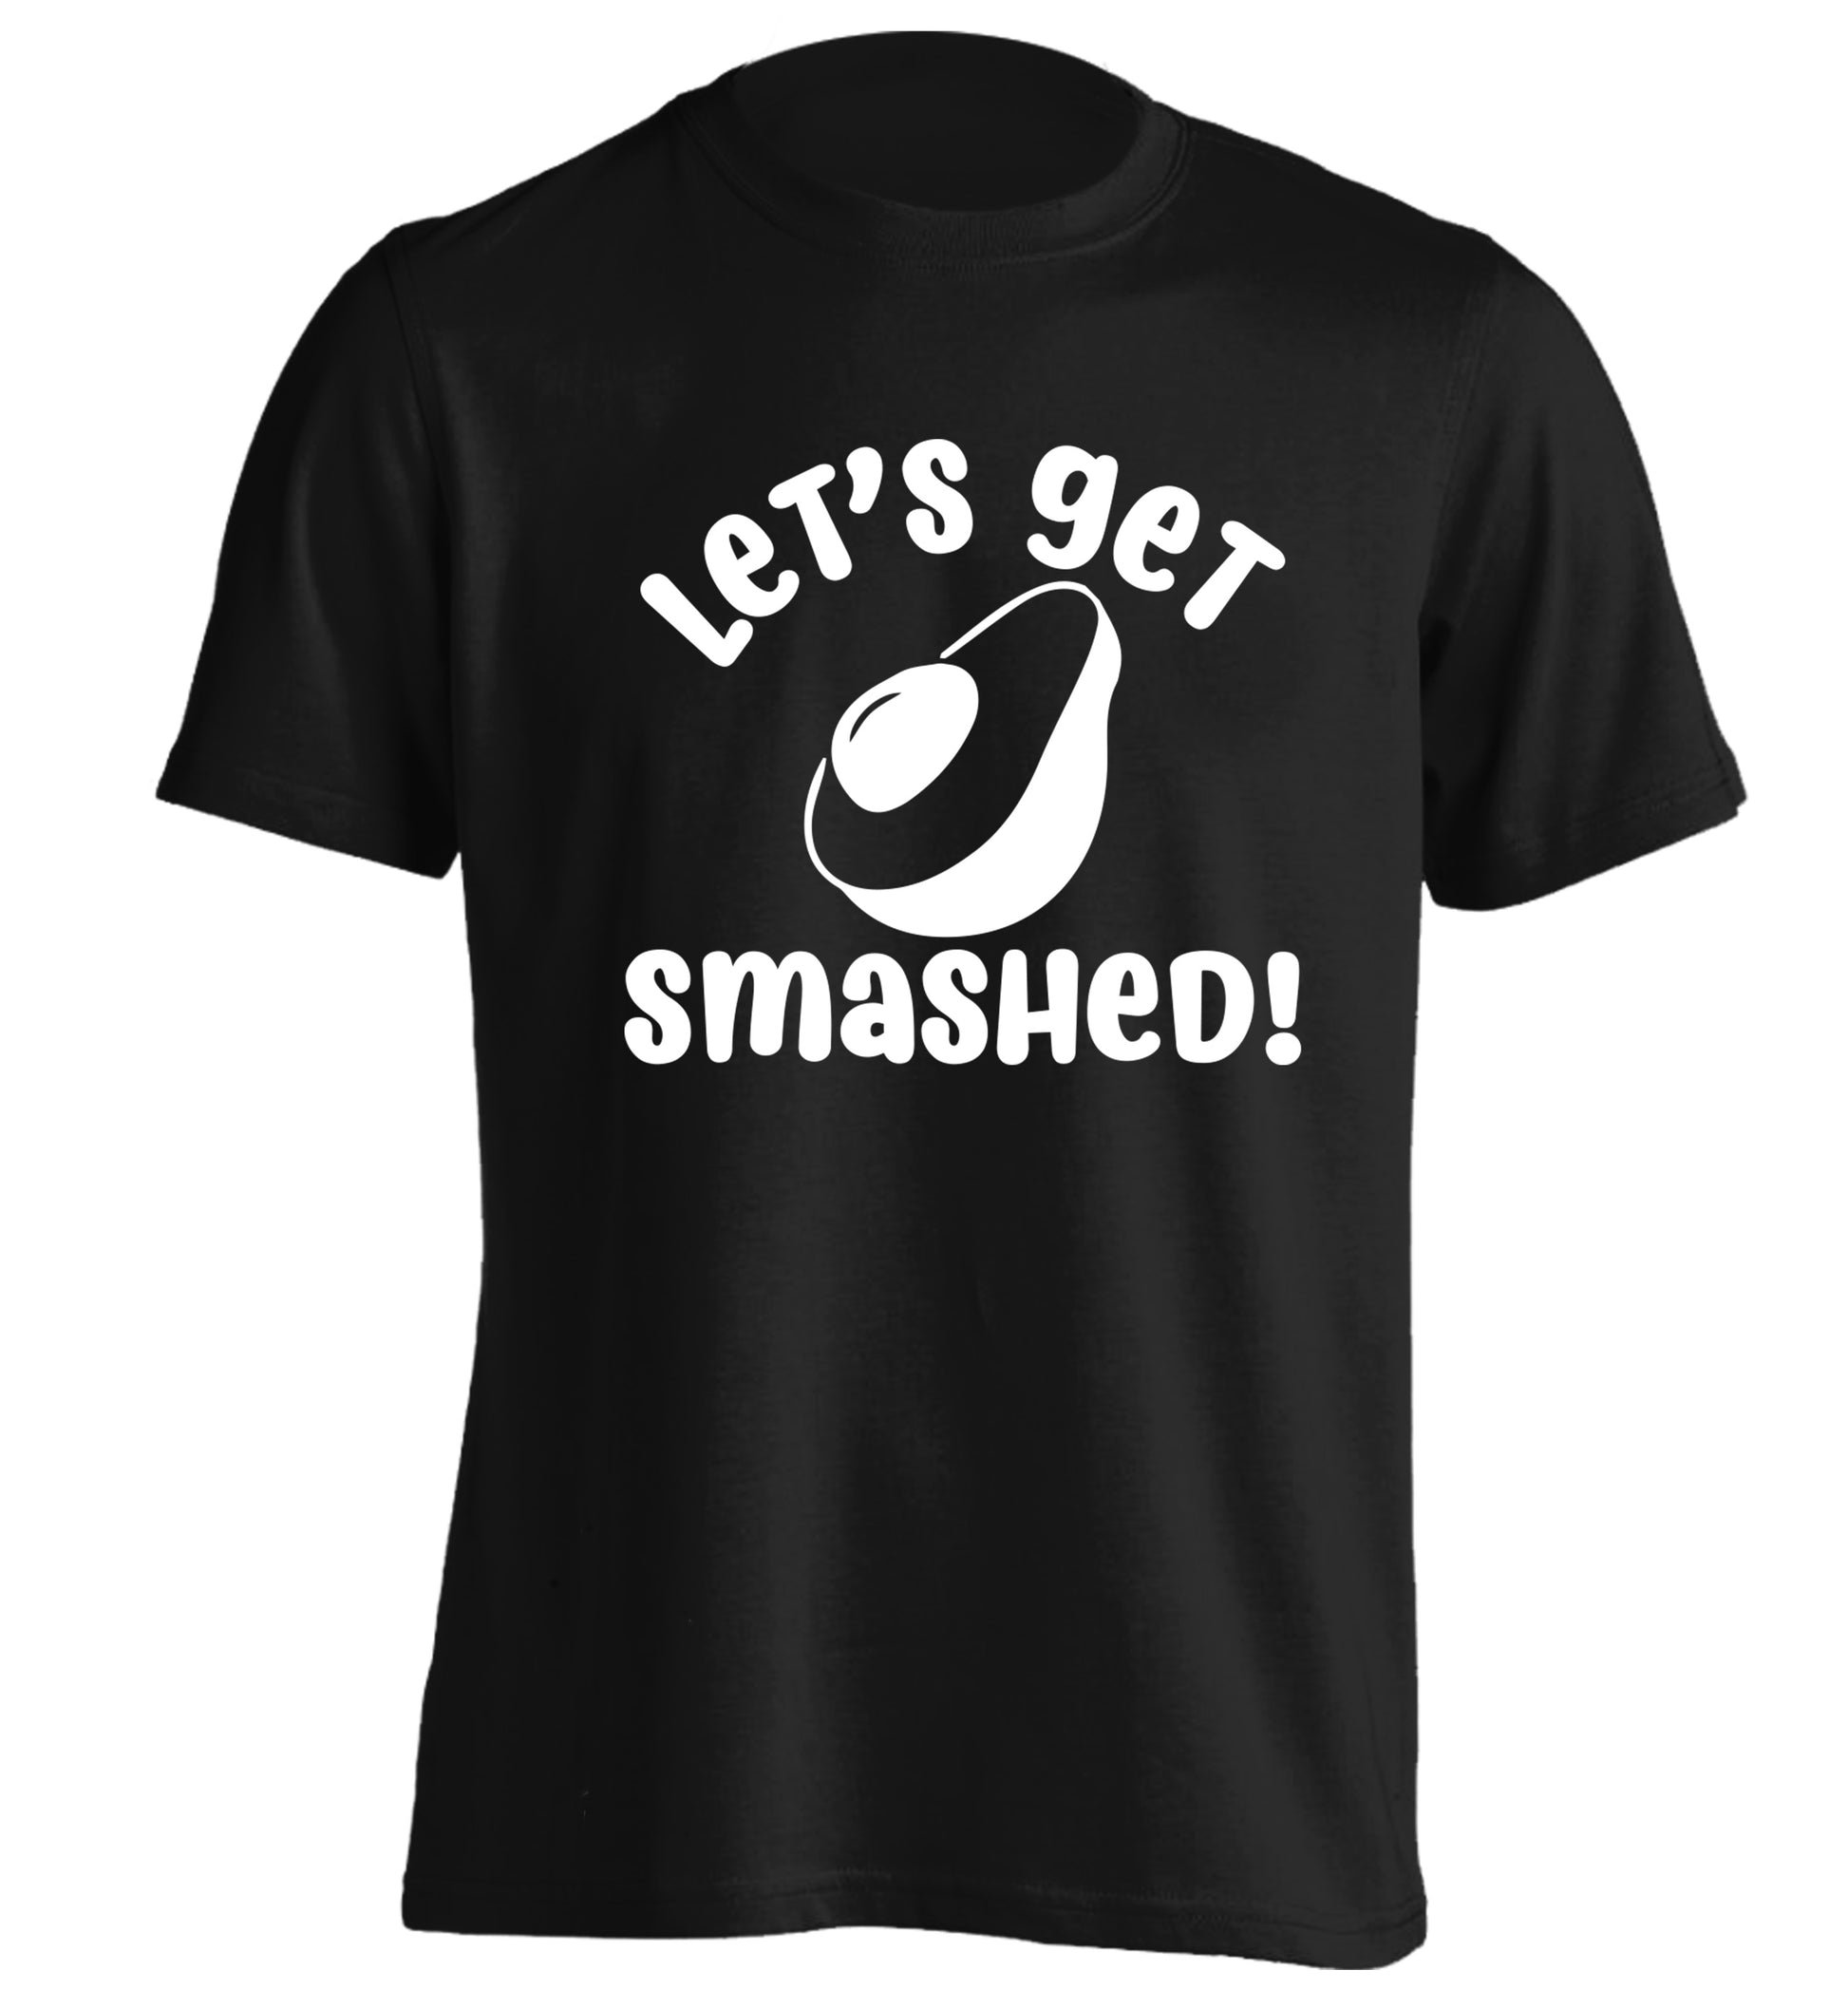 Let's get smashed adults unisex black Tshirt 2XL